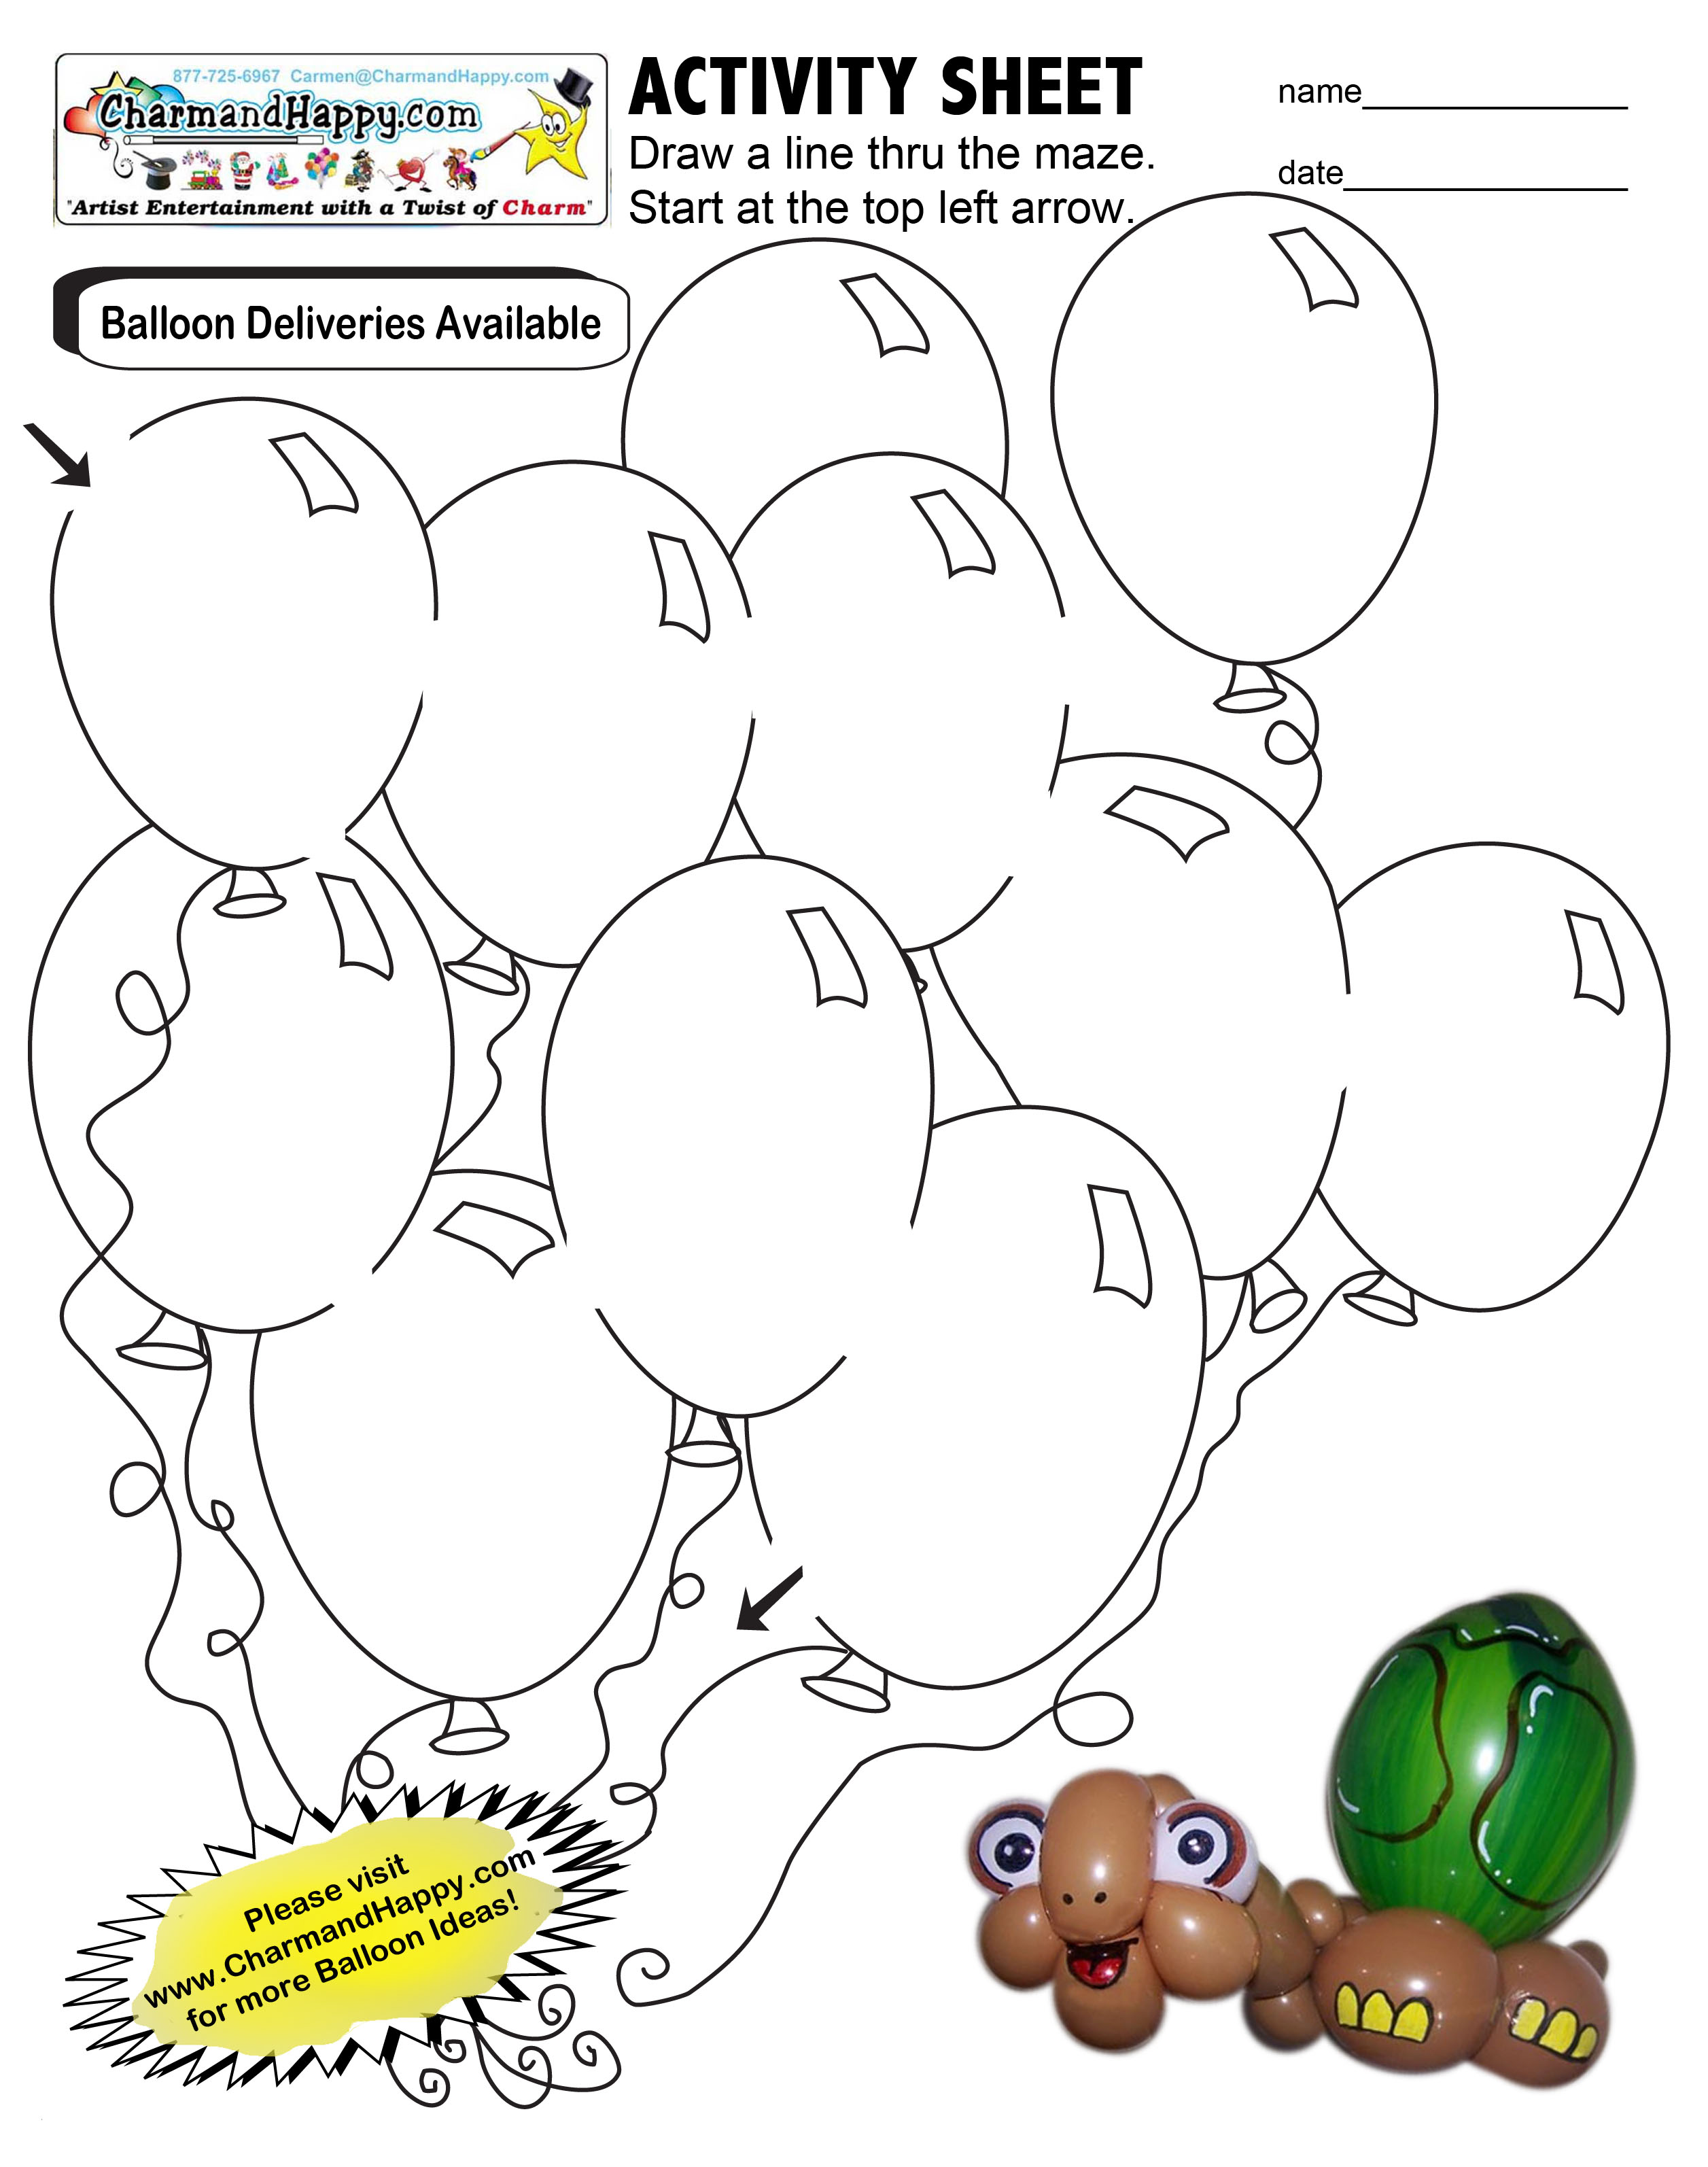 CharmandHappy.com kids activity sheet balloon maze